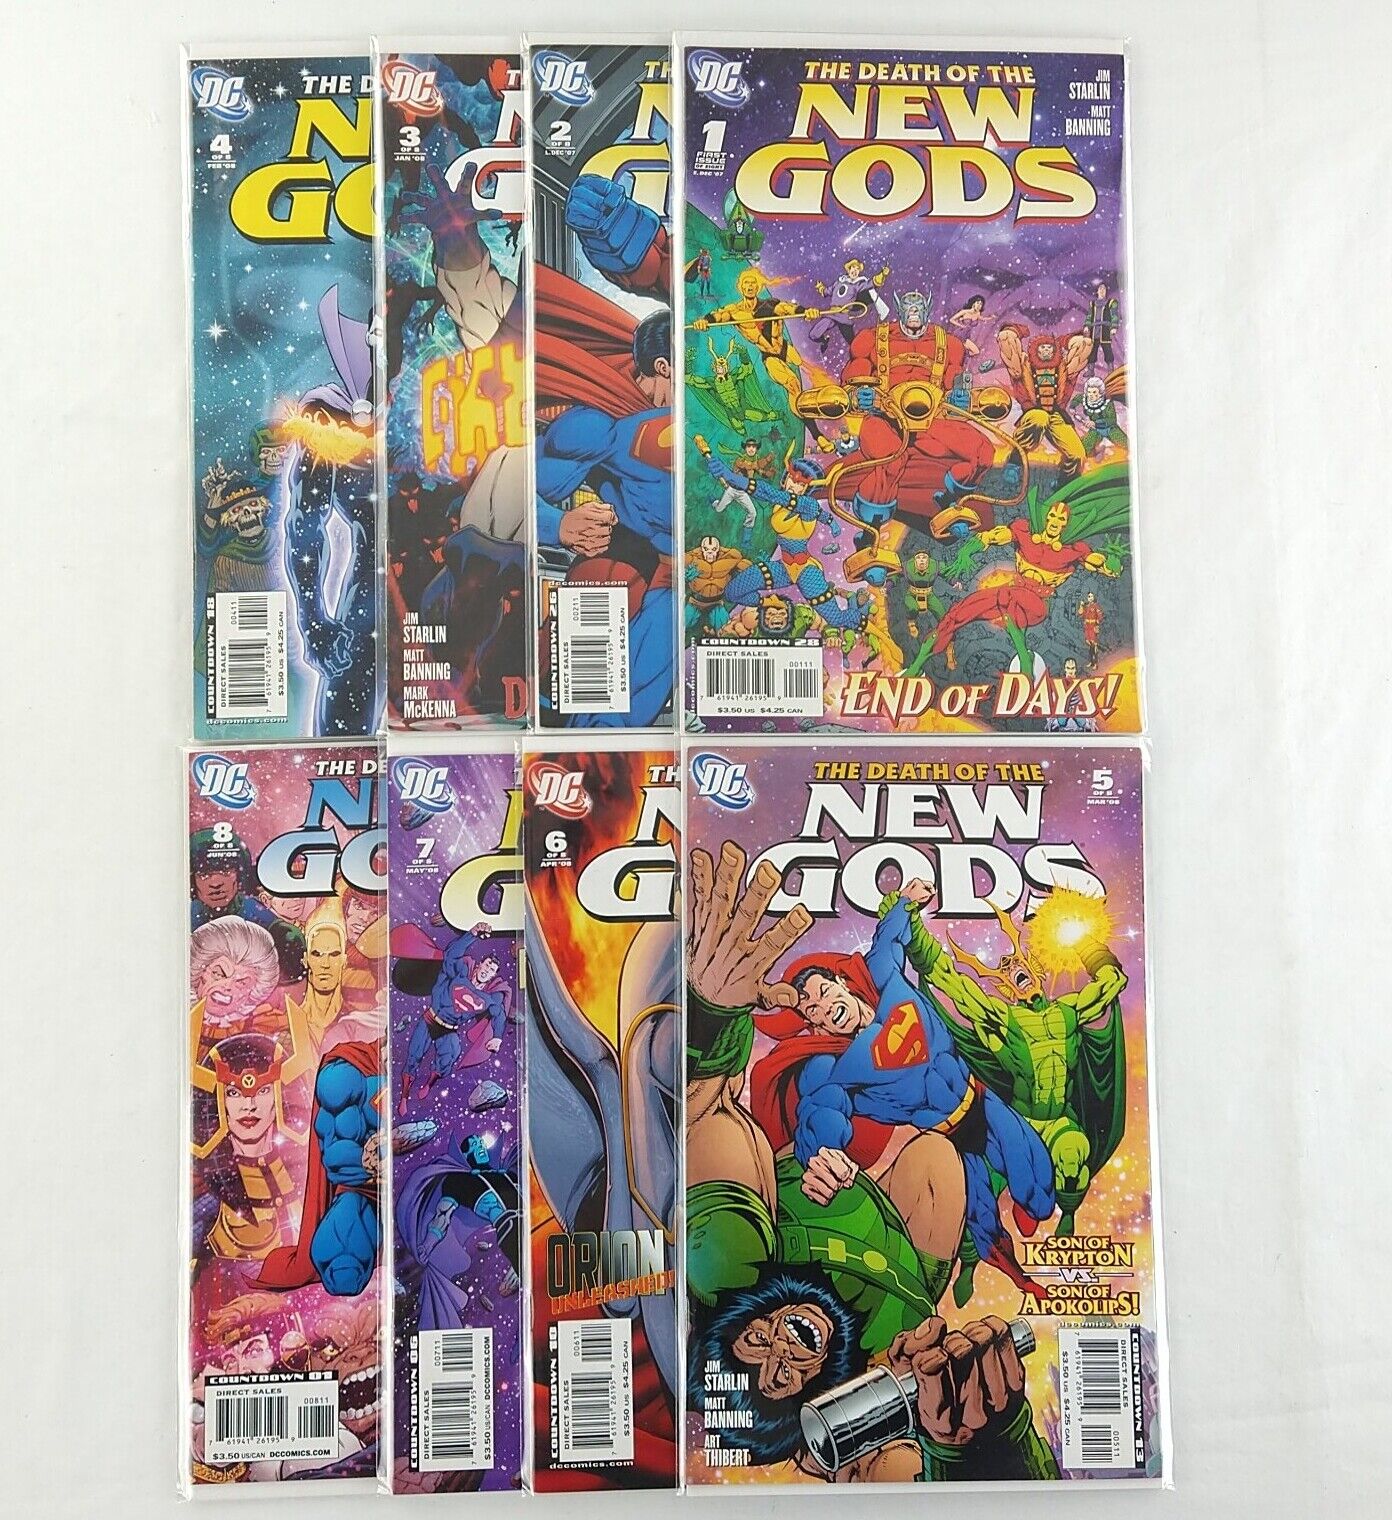 The Death of the New Gods #1-8 Complete Set (1997 DC Comics) 1 2 3 4 5 6 7 8 Lot